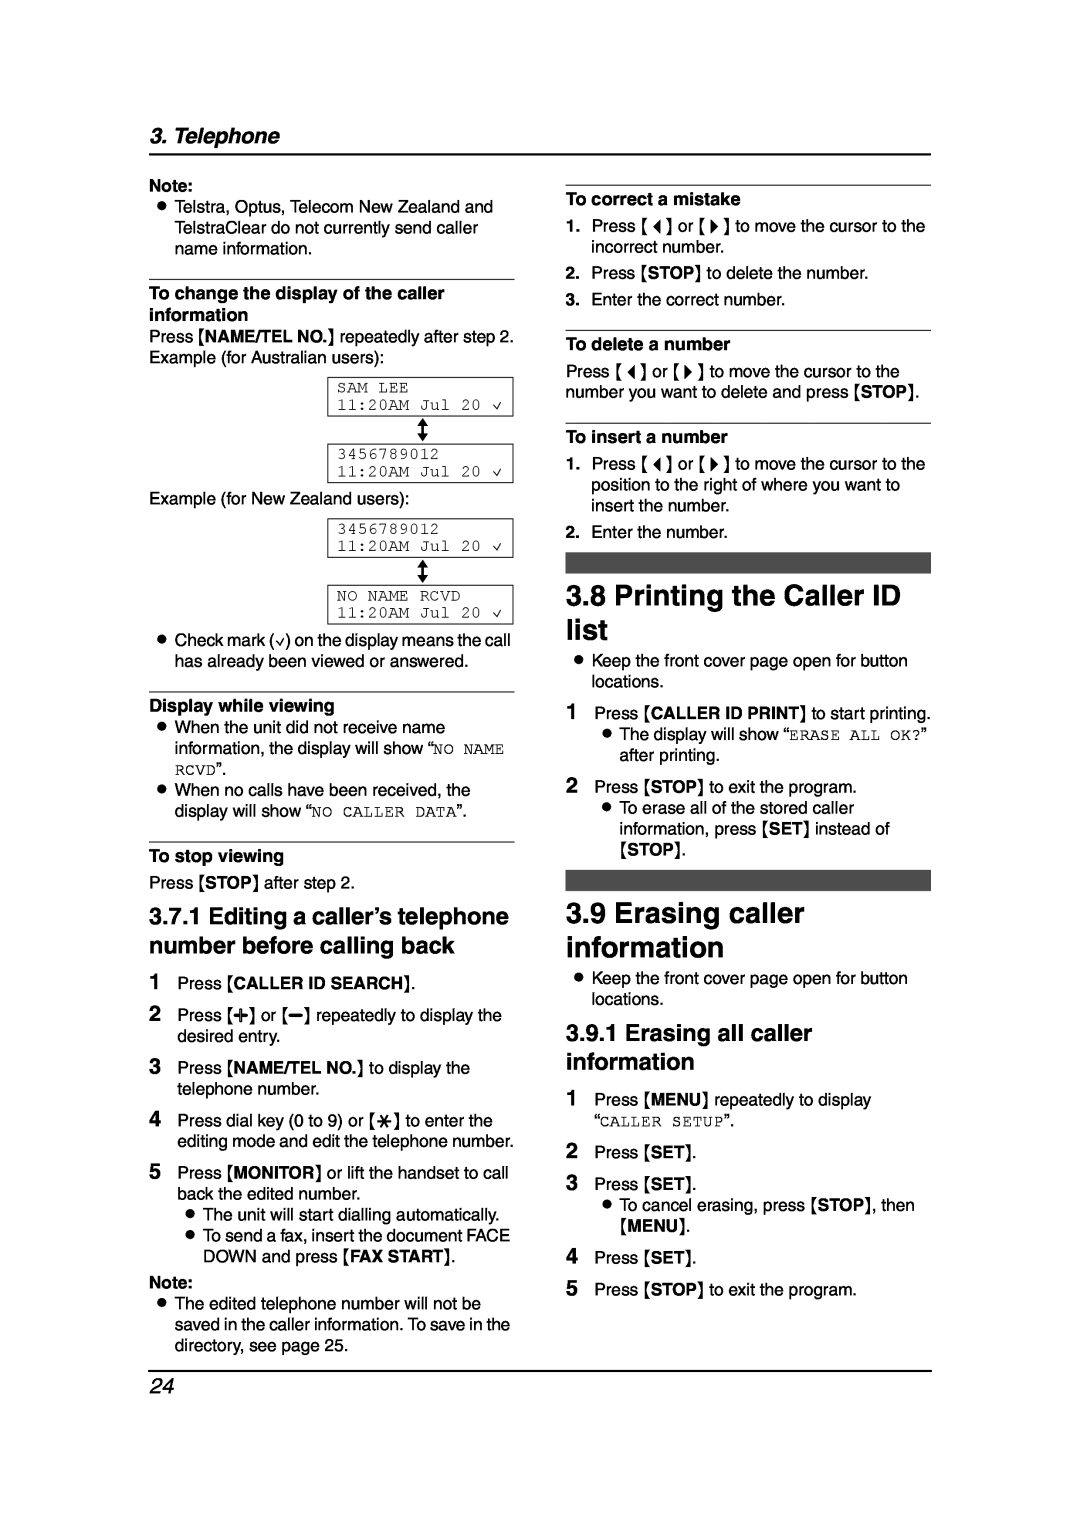 Panasonic KX-FL511AL Printing the Caller ID list, Erasing caller information, Erasing all caller information, Telephone 